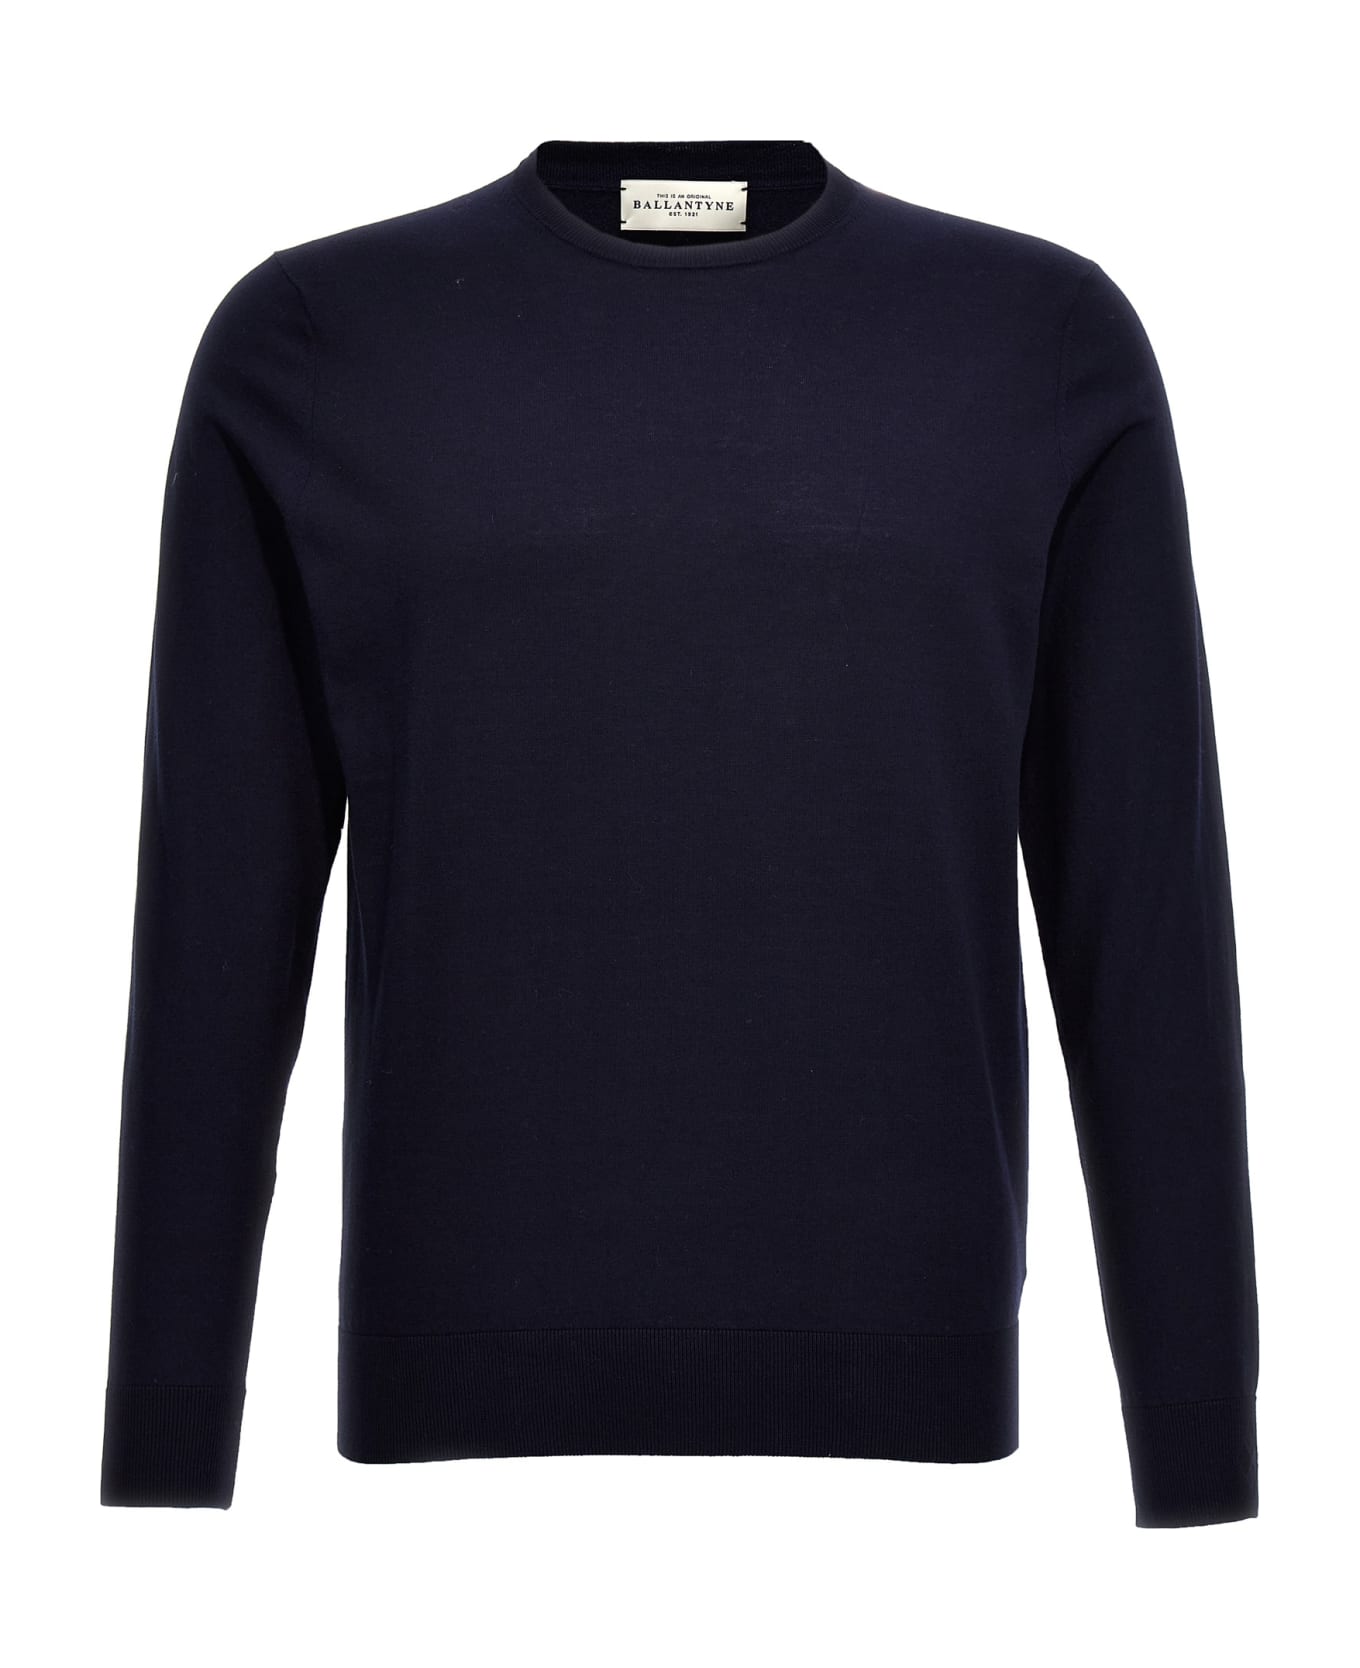 Ballantyne Cotton Sweater - Blue ニットウェア